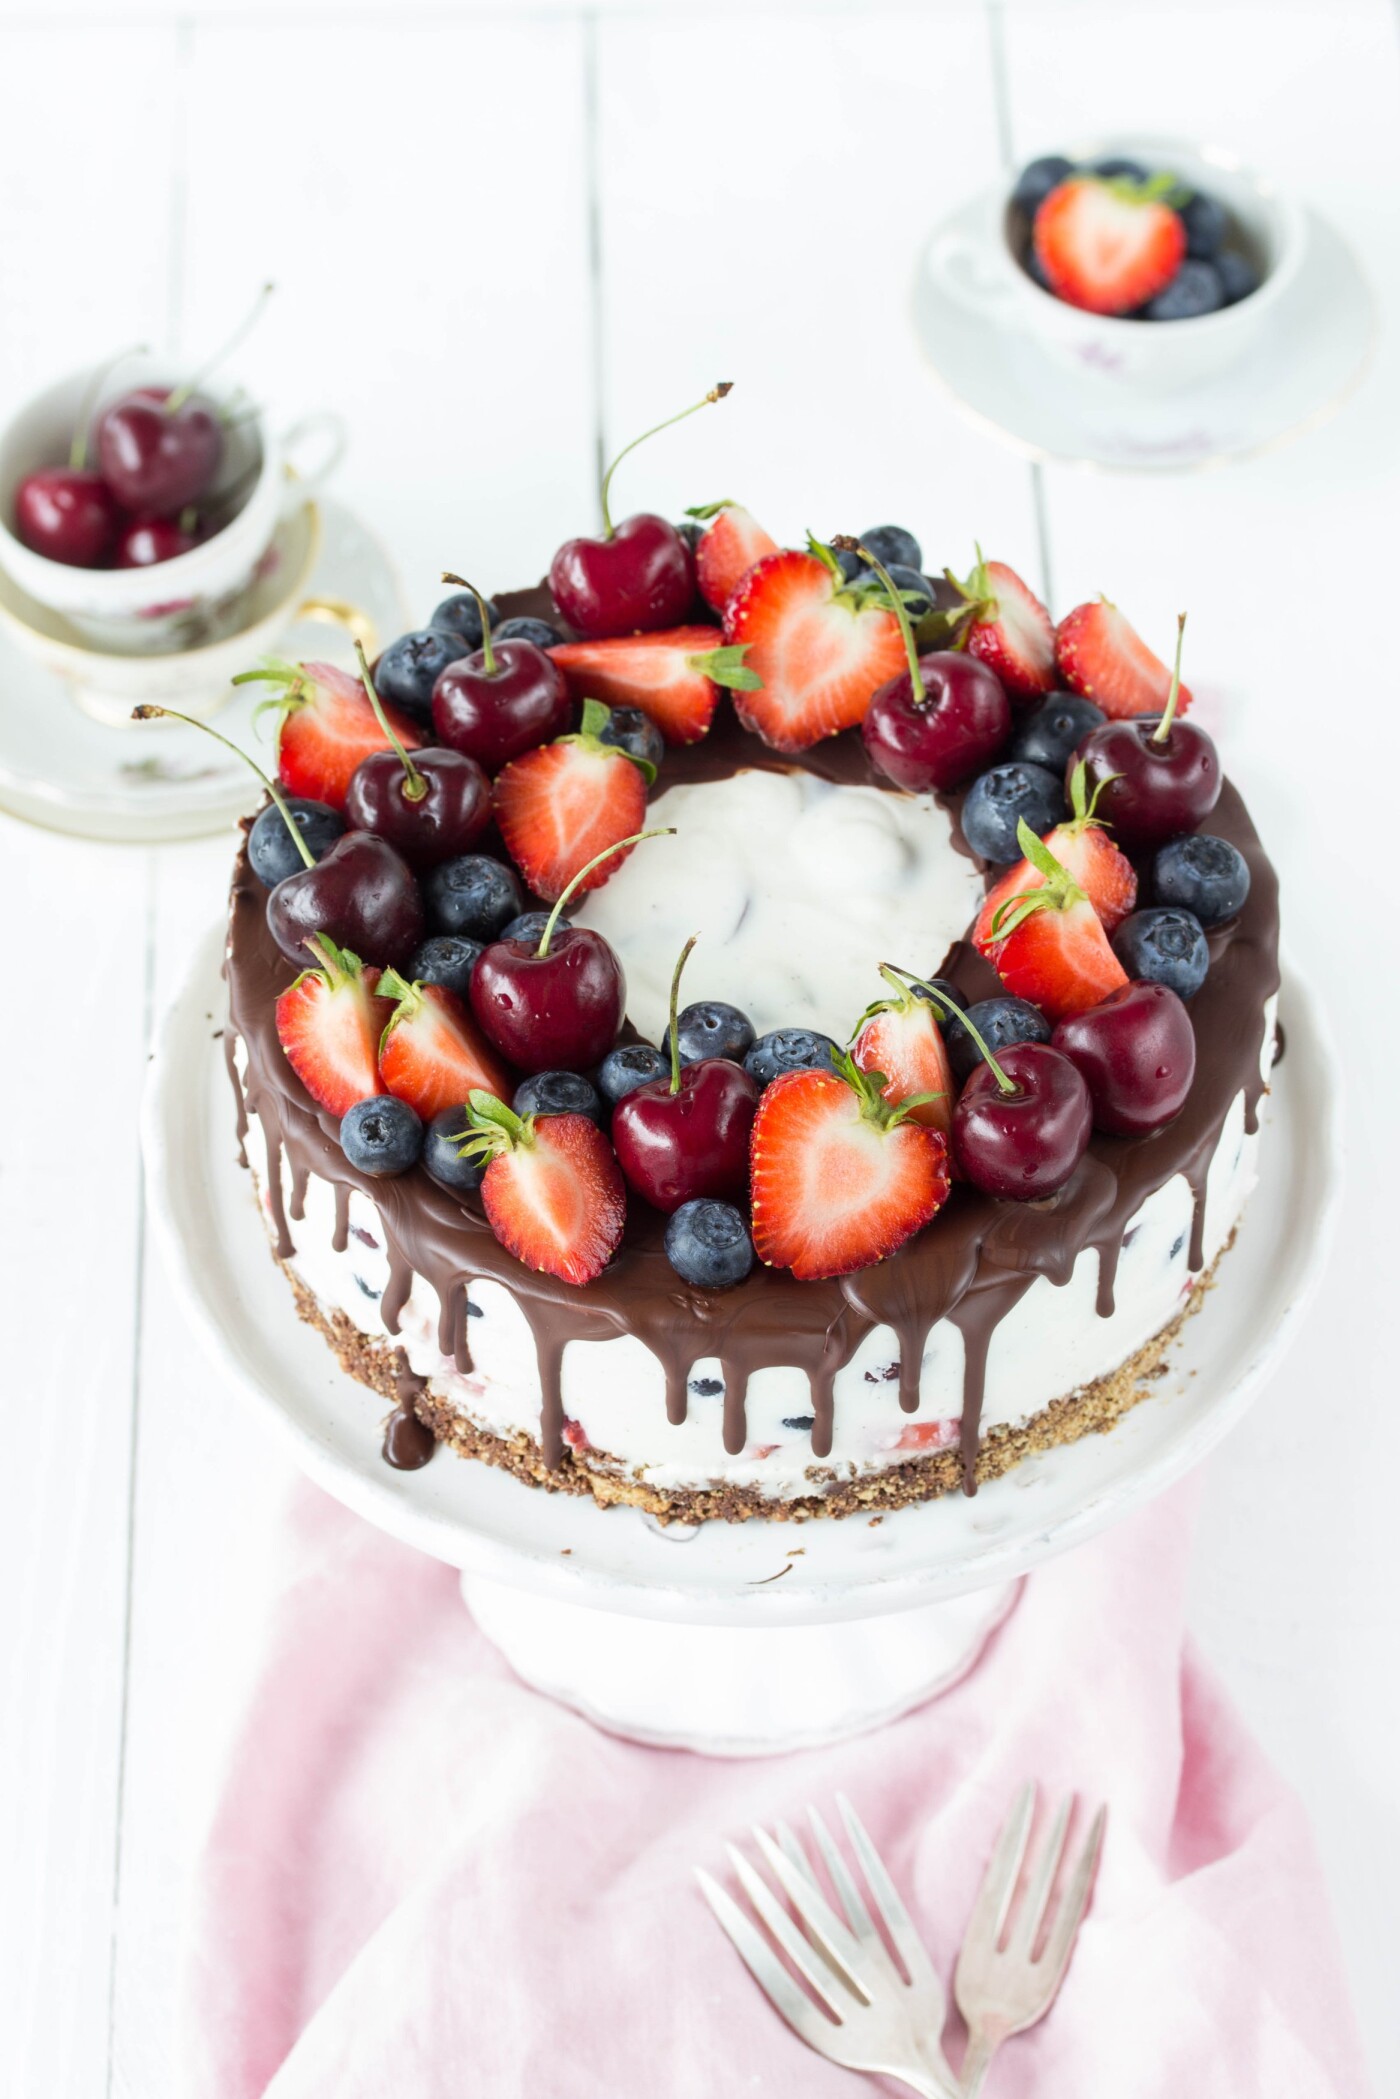 Verry Berry Yogurt Cake<br />
<br />
Find the recipe here: http://wp.me/p4za9k-NU